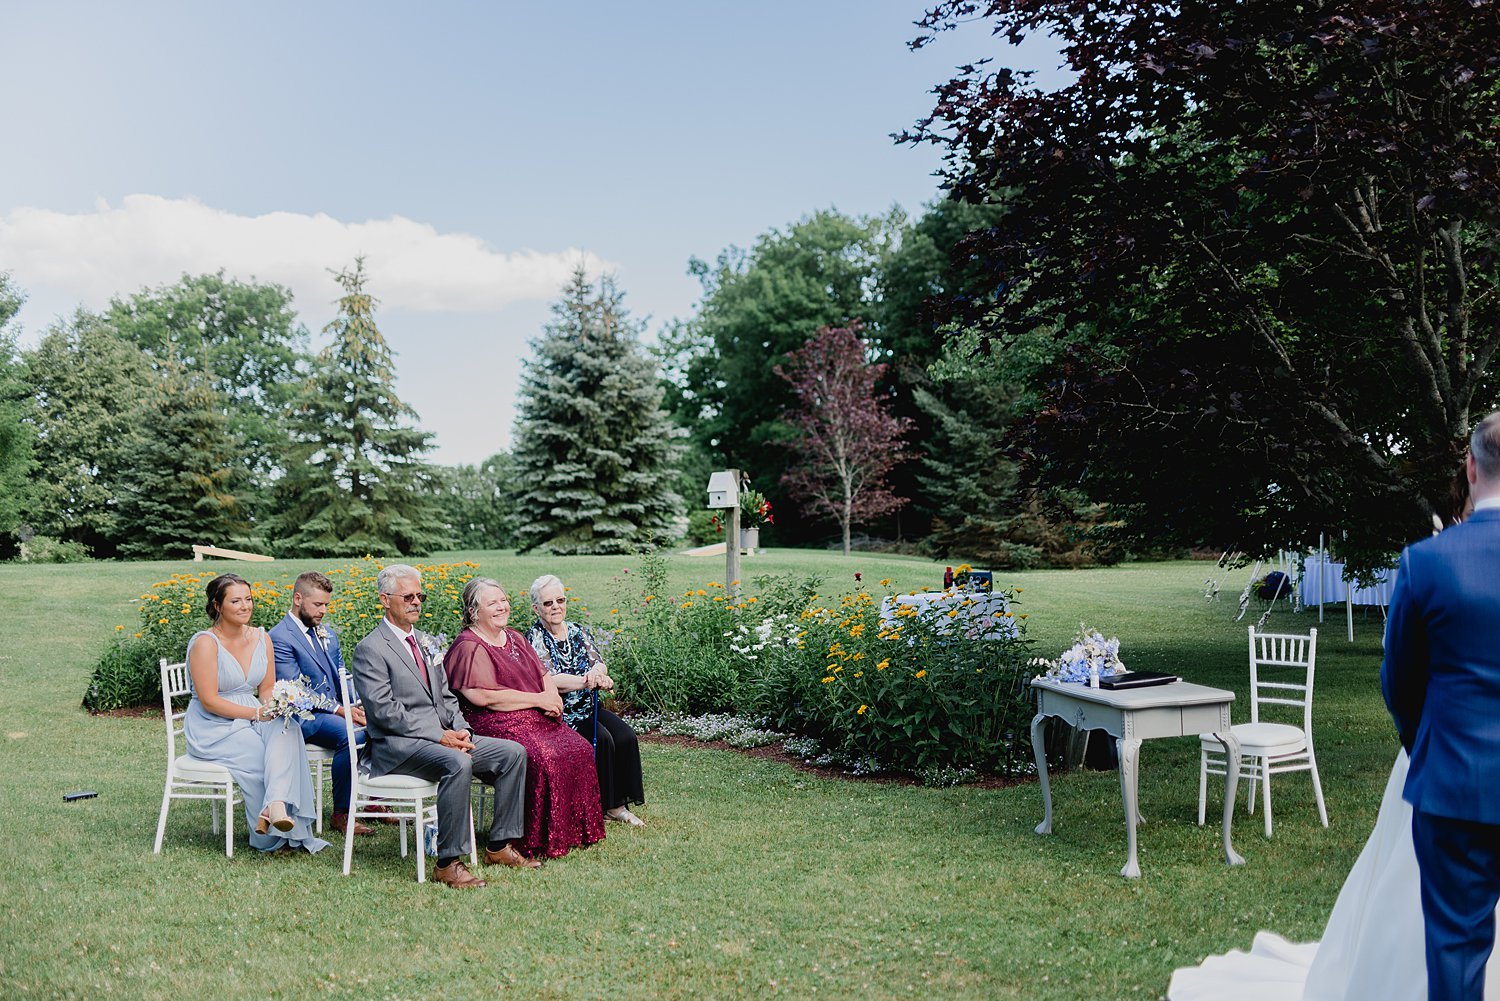 Elegant Summer Backyard Tented Wedding in Sydenham, Ontario | Prince Edward County Wedding Photographer | Holly McMurter Photographs_0049.jpg